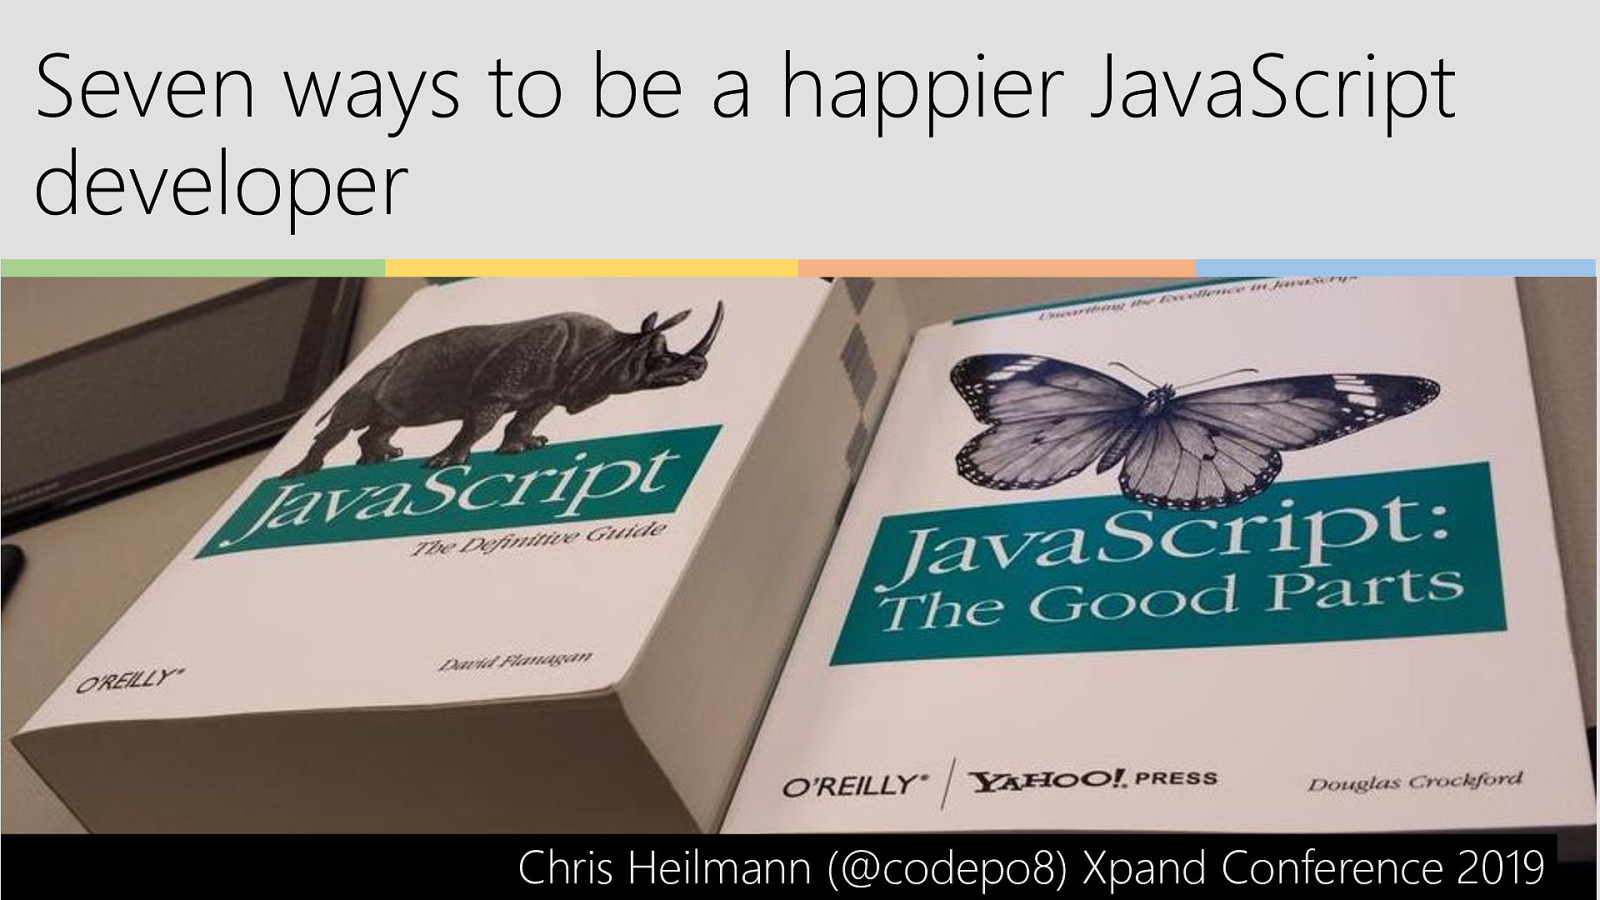 Seven Things to make you a happier JavaScript developer